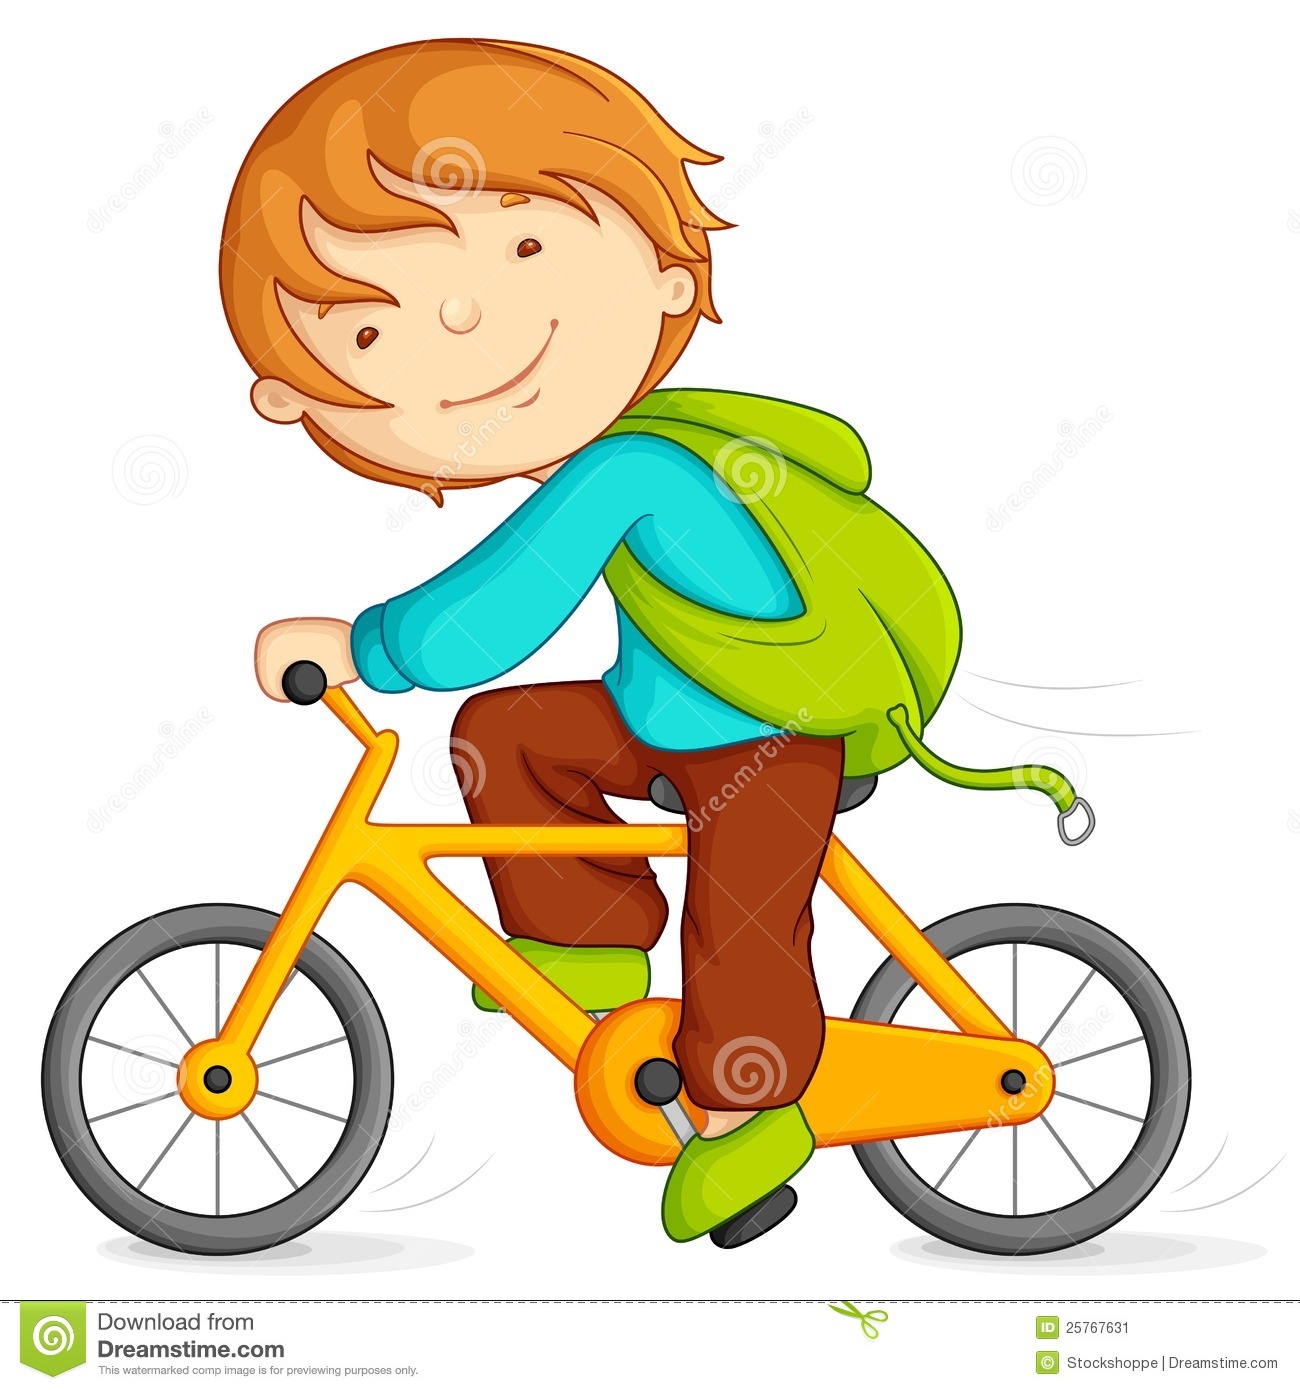 Child riding bike.